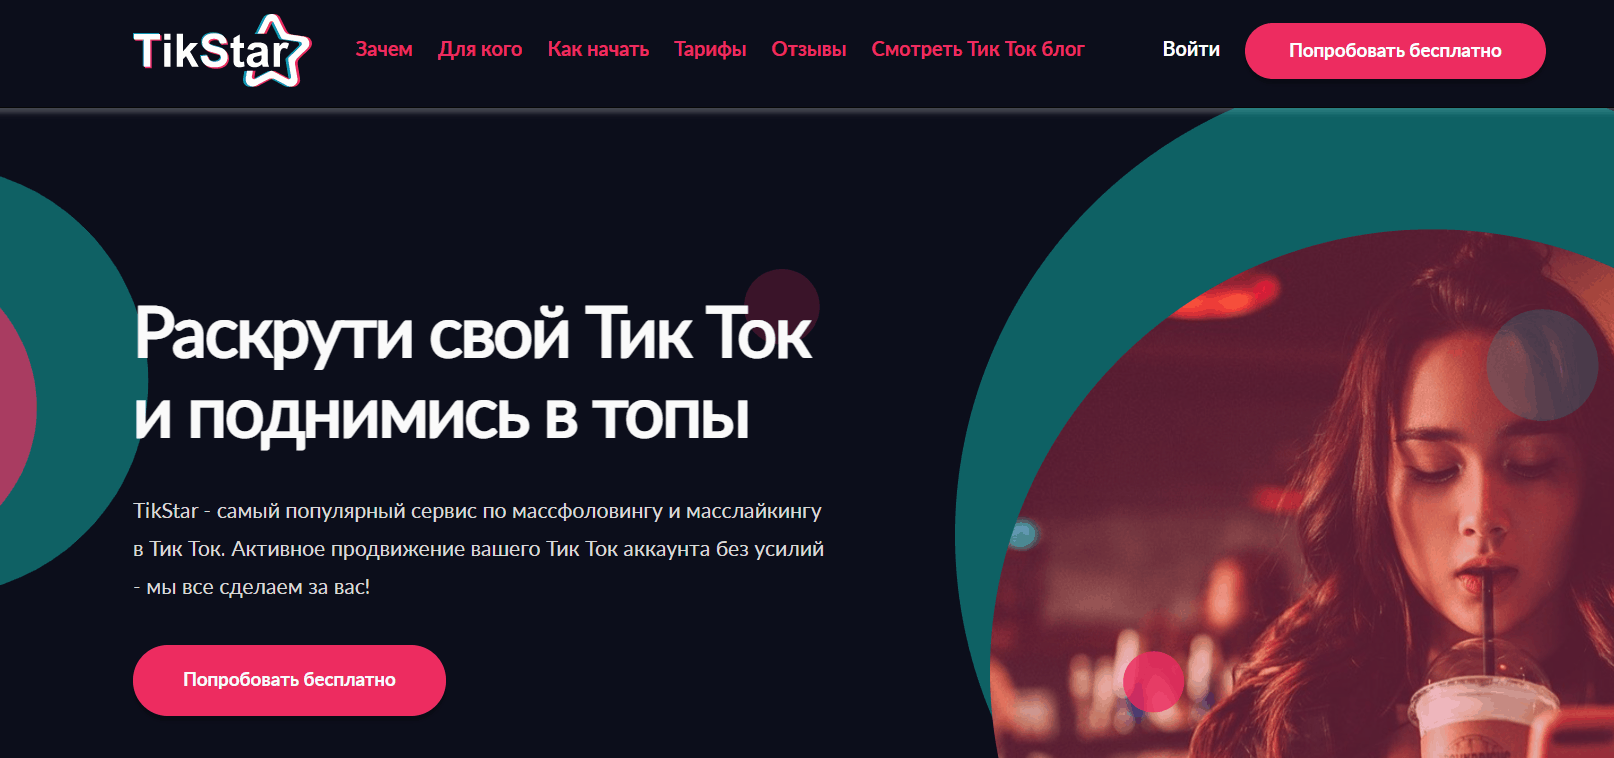 TikStar - продвижение в TikTok